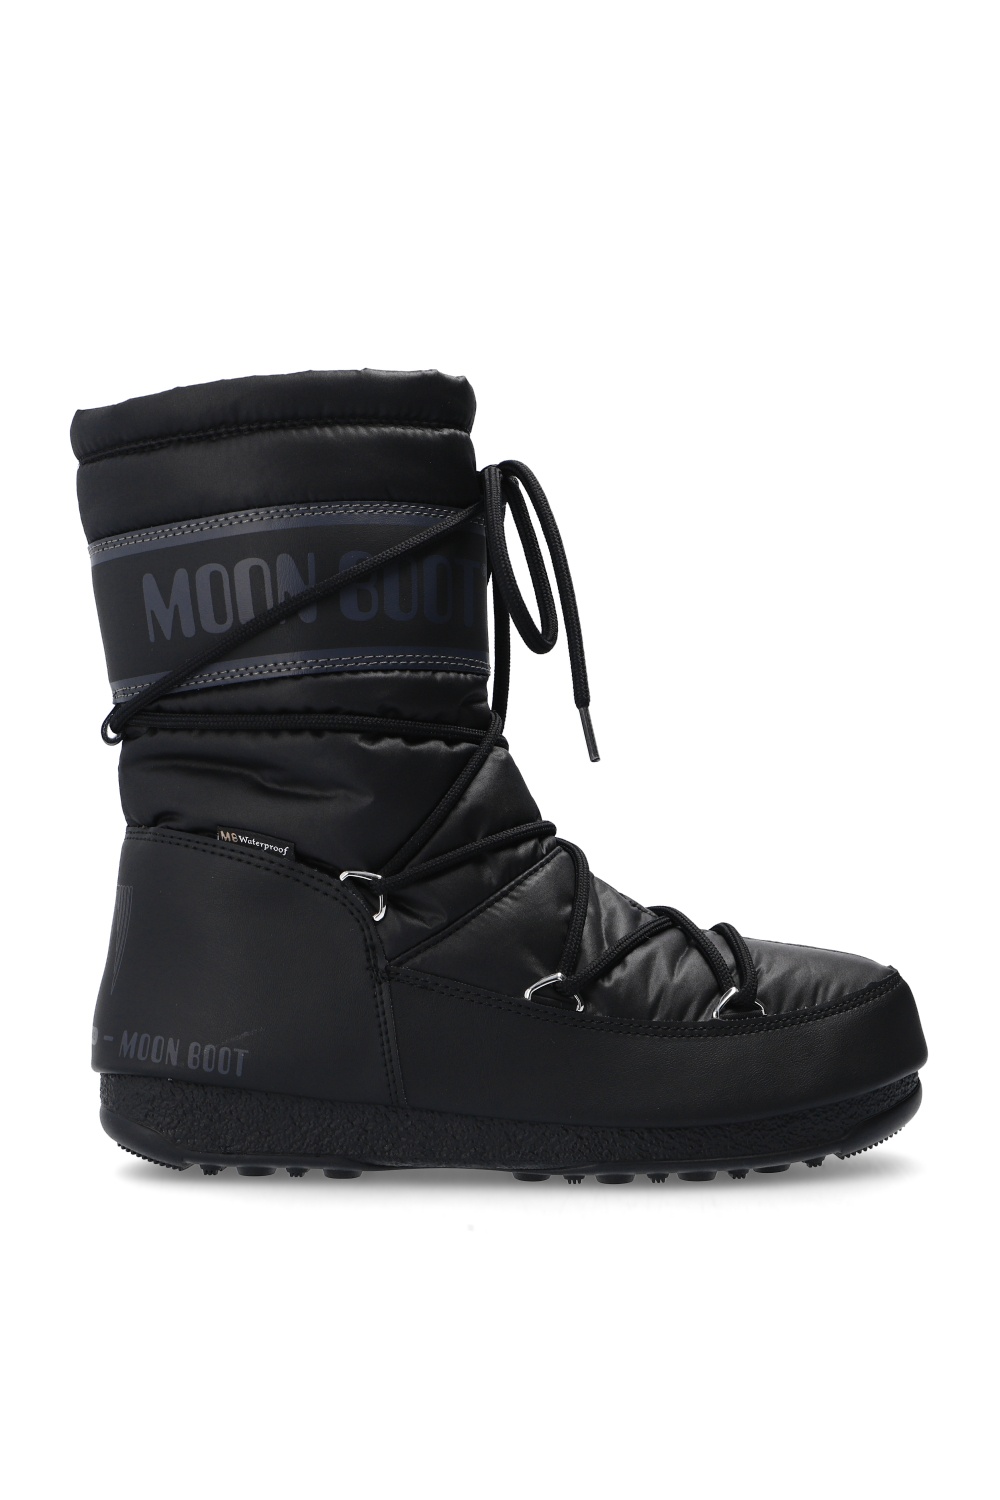 boots Moon - IetpShops Germany - Sneakers B B